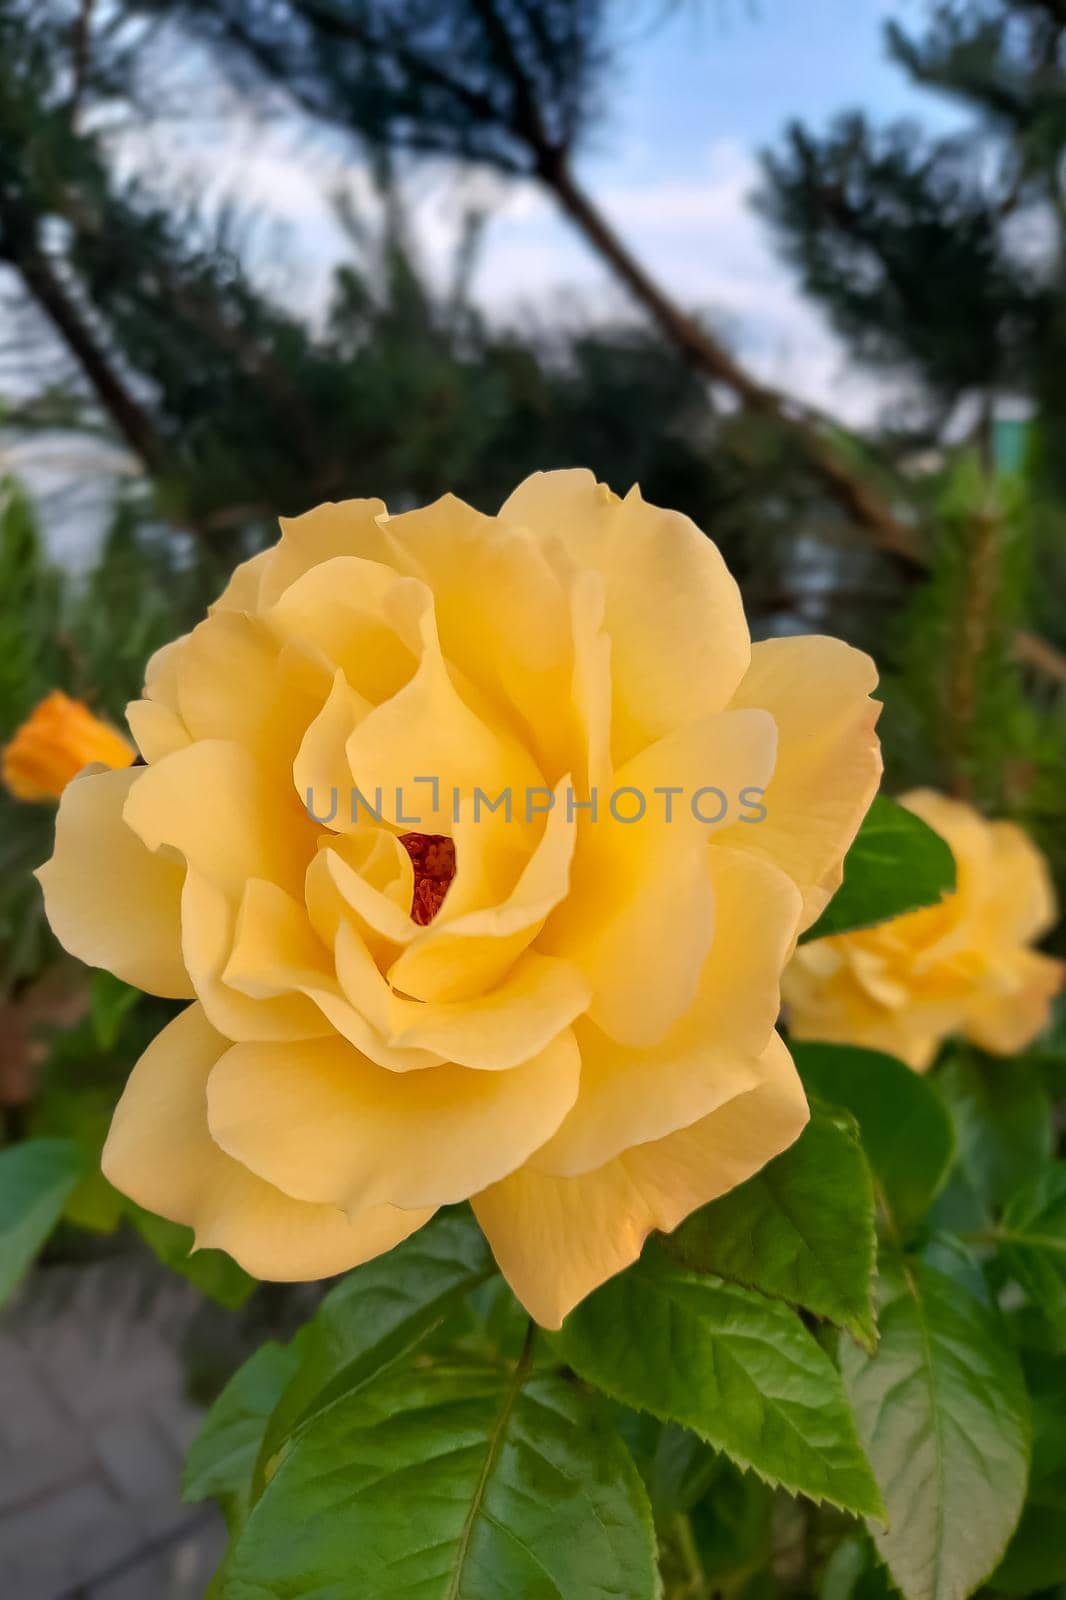 Beautiful yellow garden rose blooms in spring